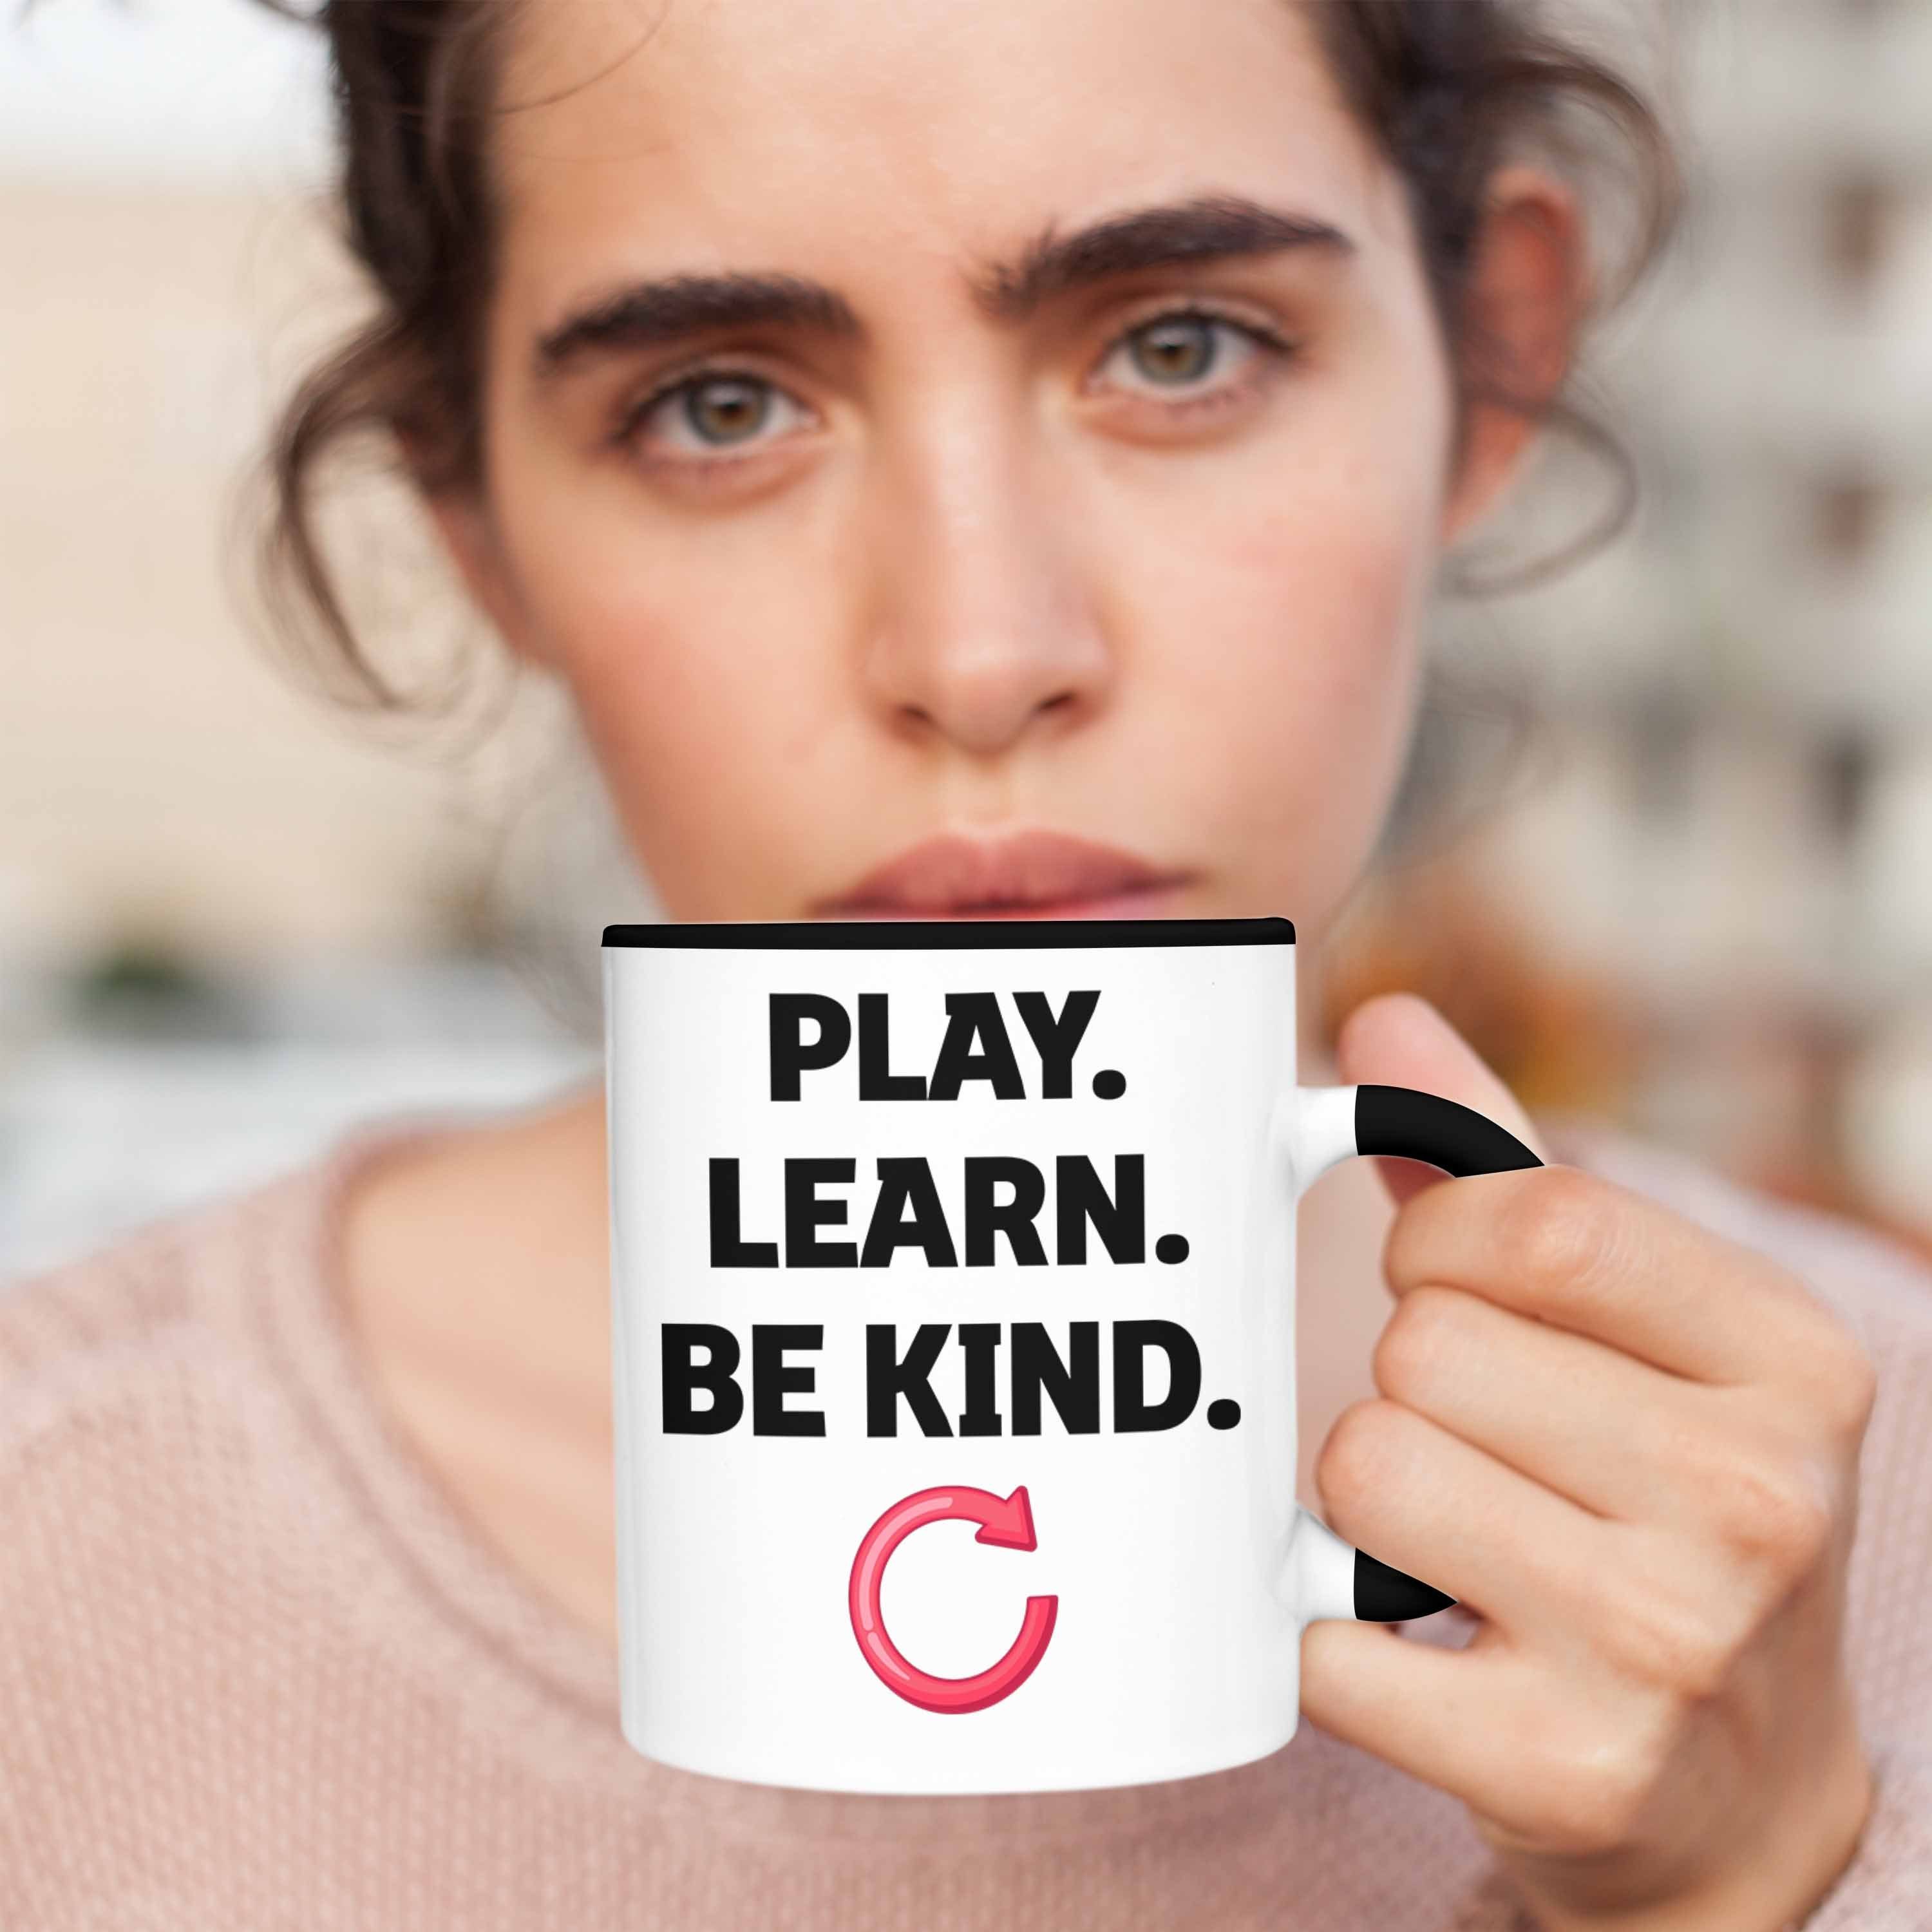 Trendation Tasse Nett Tasse Kind Kindness Schwarz Geschenk Play Day Repeat Sei Mo Anti Be Learn